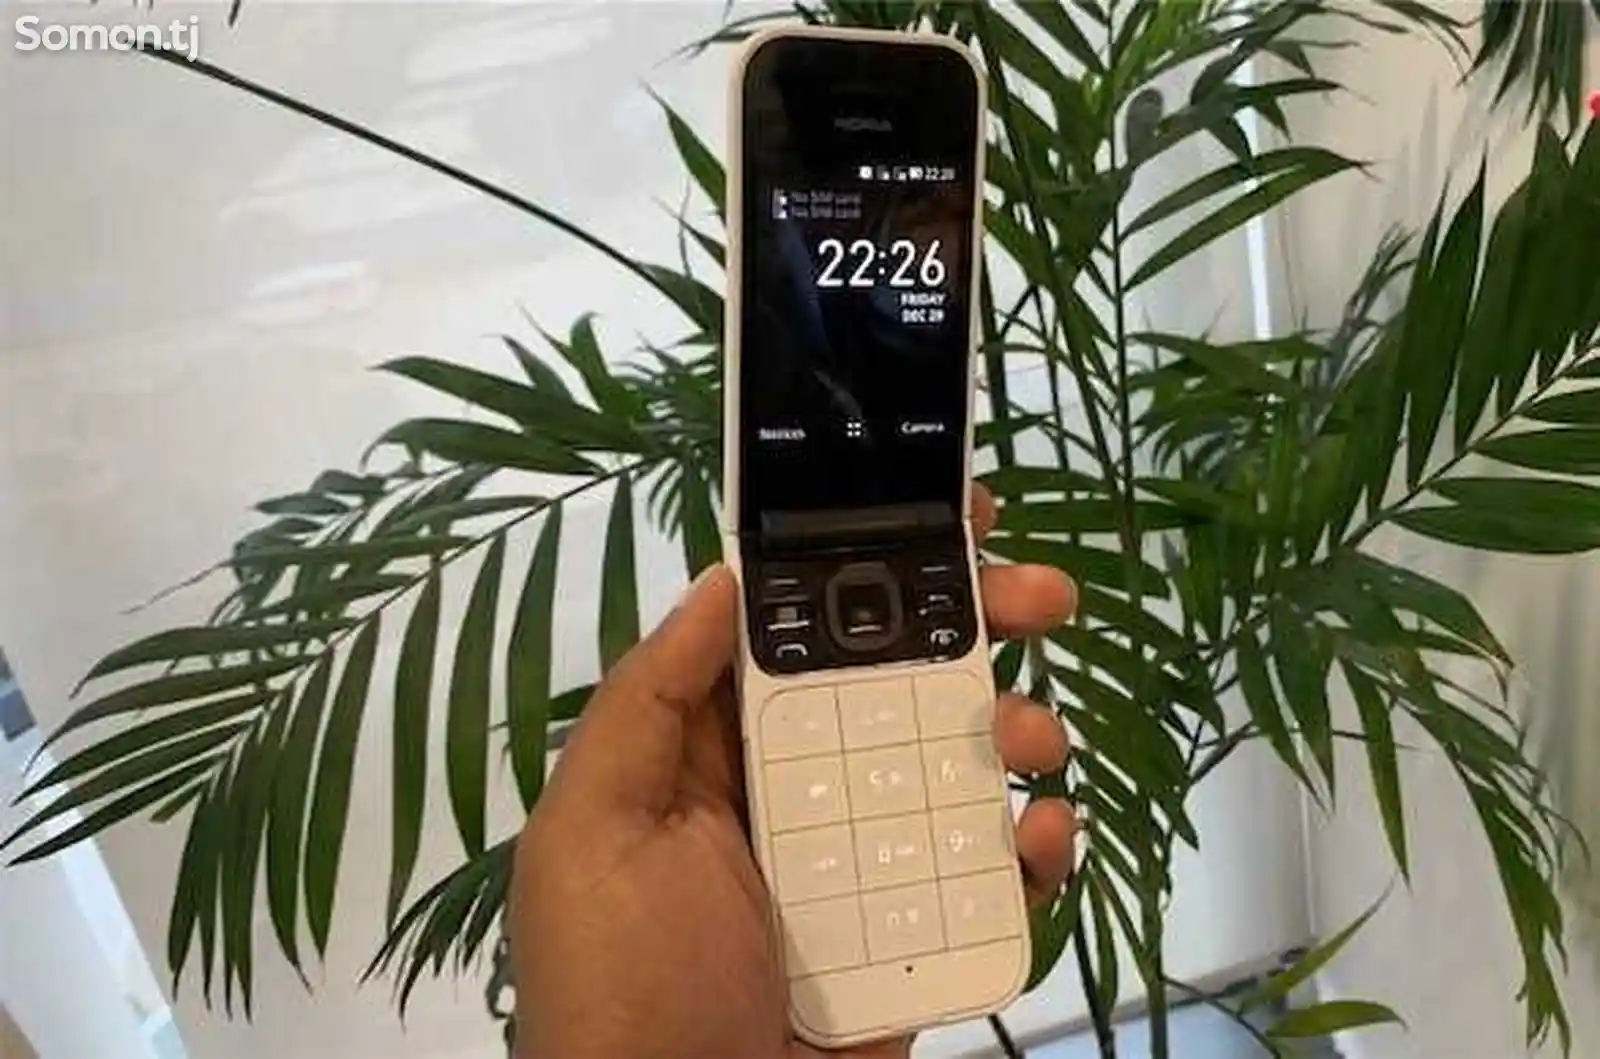 Nokia 2720 Flip-3